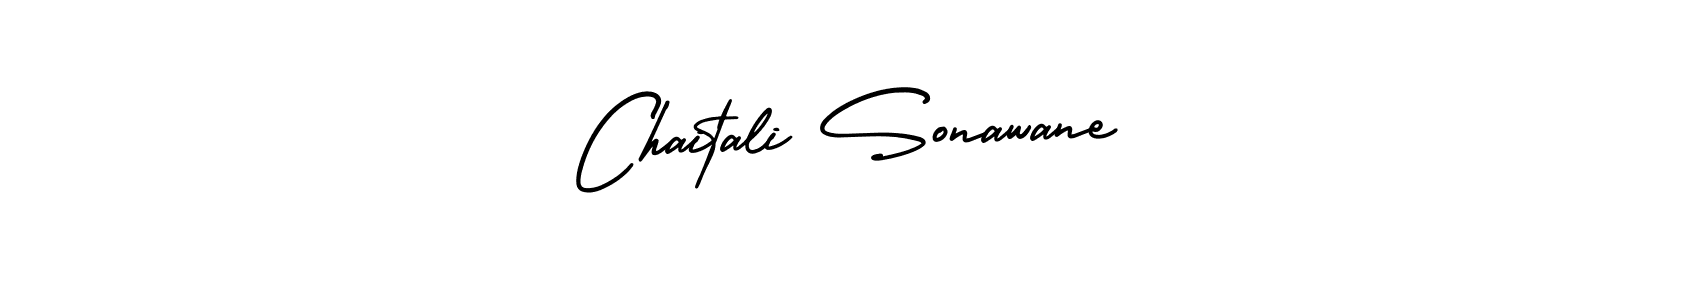 How to Draw Chaitali Sonawane signature style? AmerikaSignatureDemo-Regular is a latest design signature styles for name Chaitali Sonawane. Chaitali Sonawane signature style 3 images and pictures png